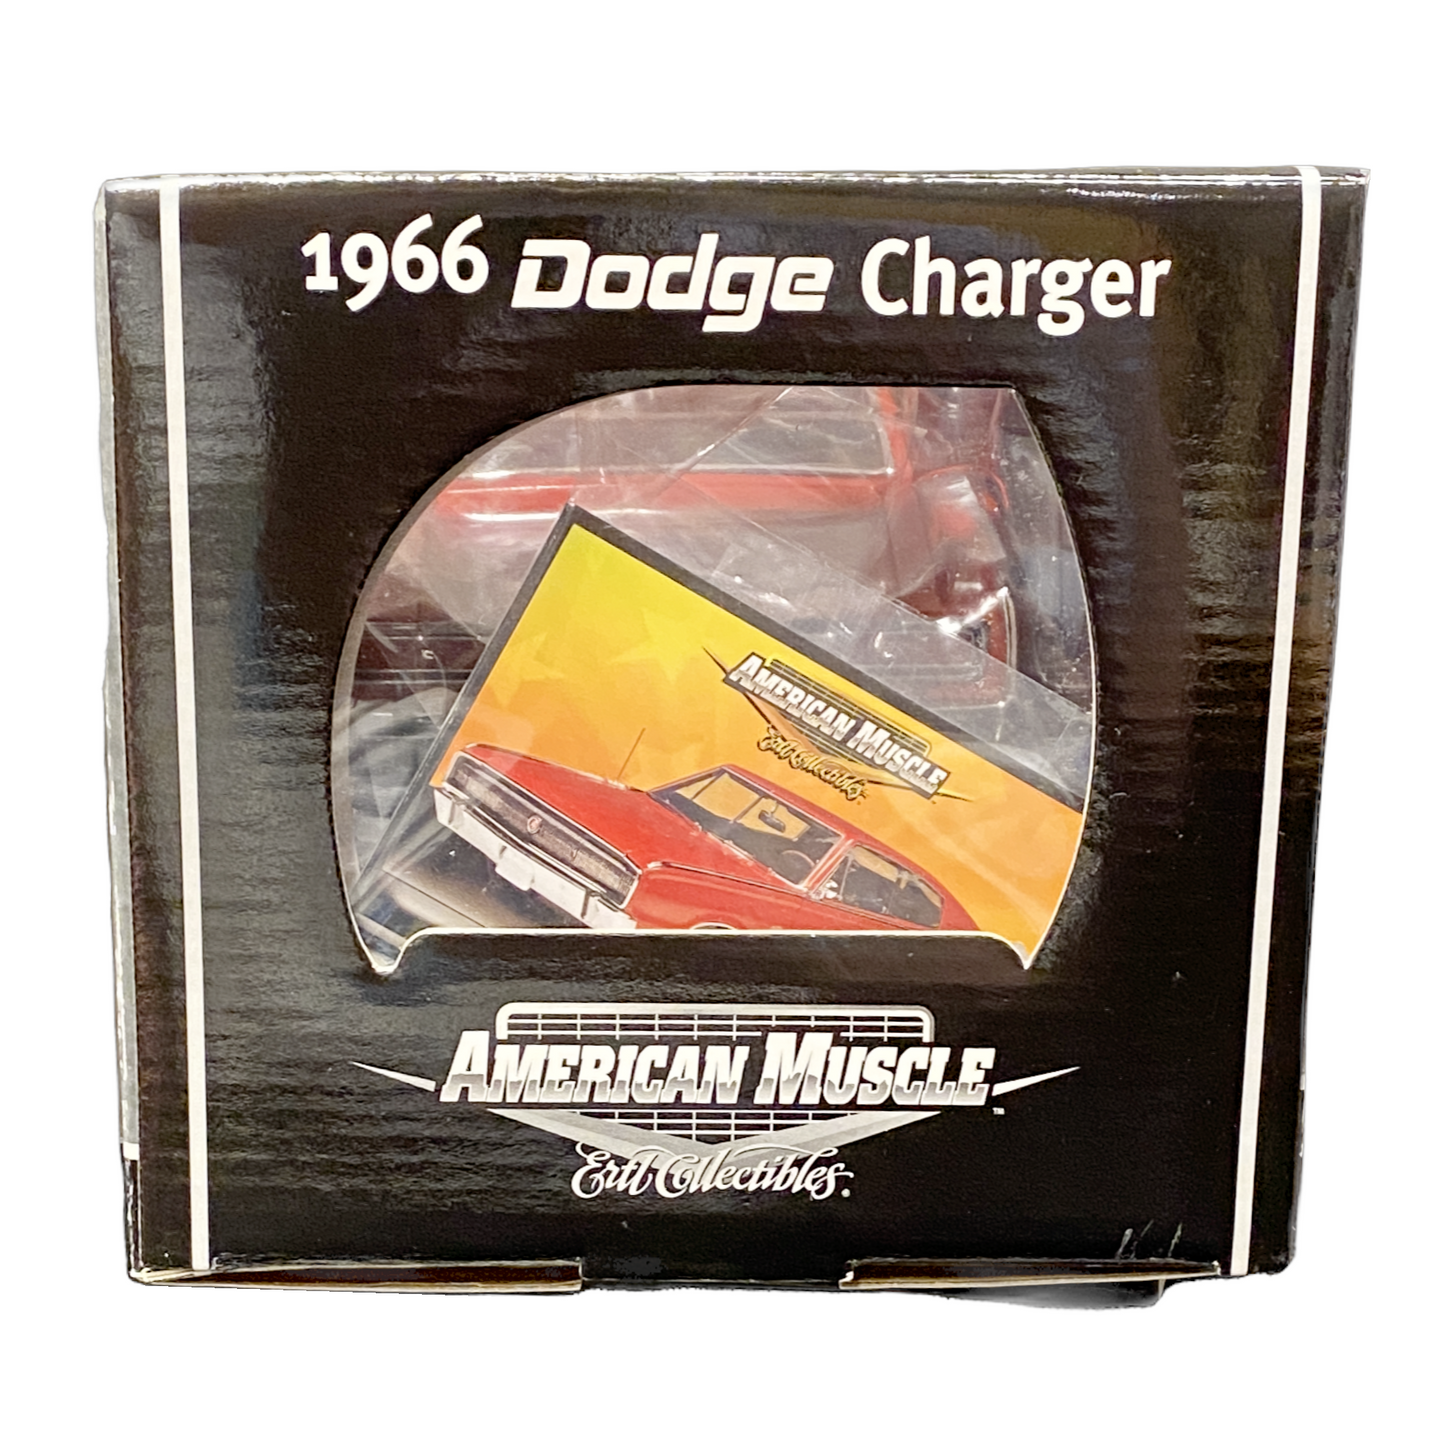 1/18 1966 Dodge Charger Hemi Authentics Series Red w/black interior - Ertl Collectibles